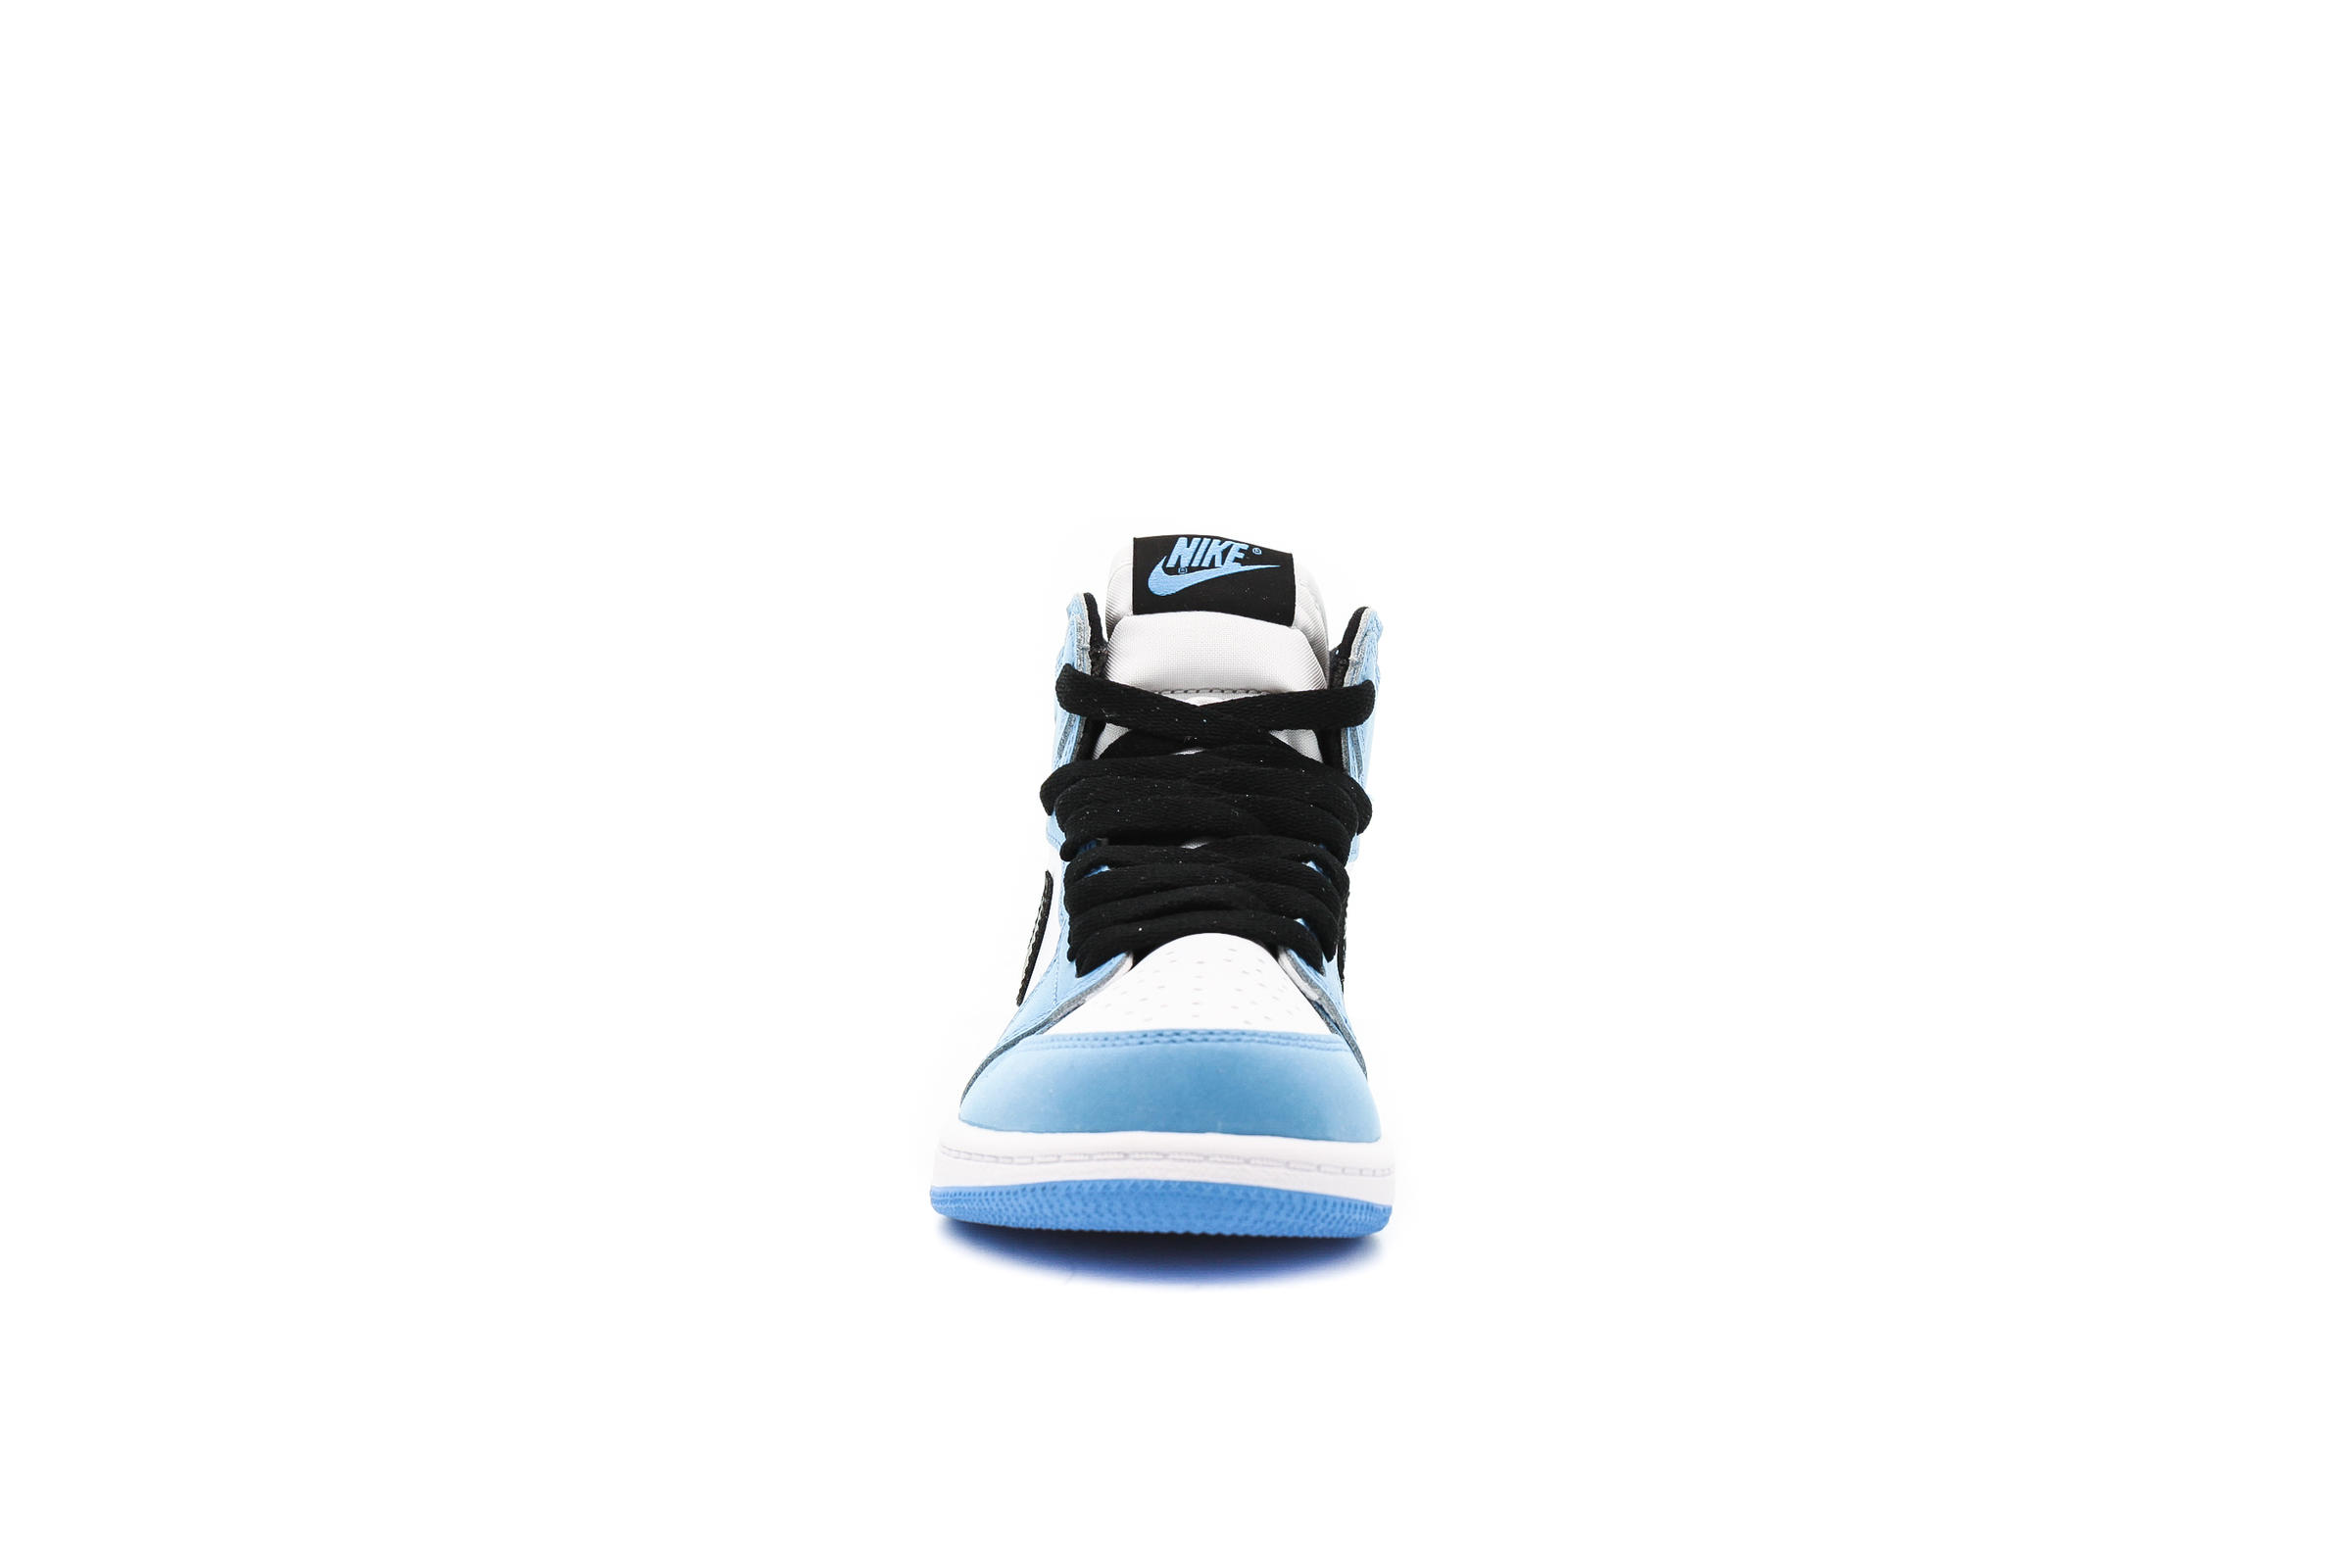 Air Jordan 1 RETRO HIGH OG (PS) "UNIVERSITY BLUE"